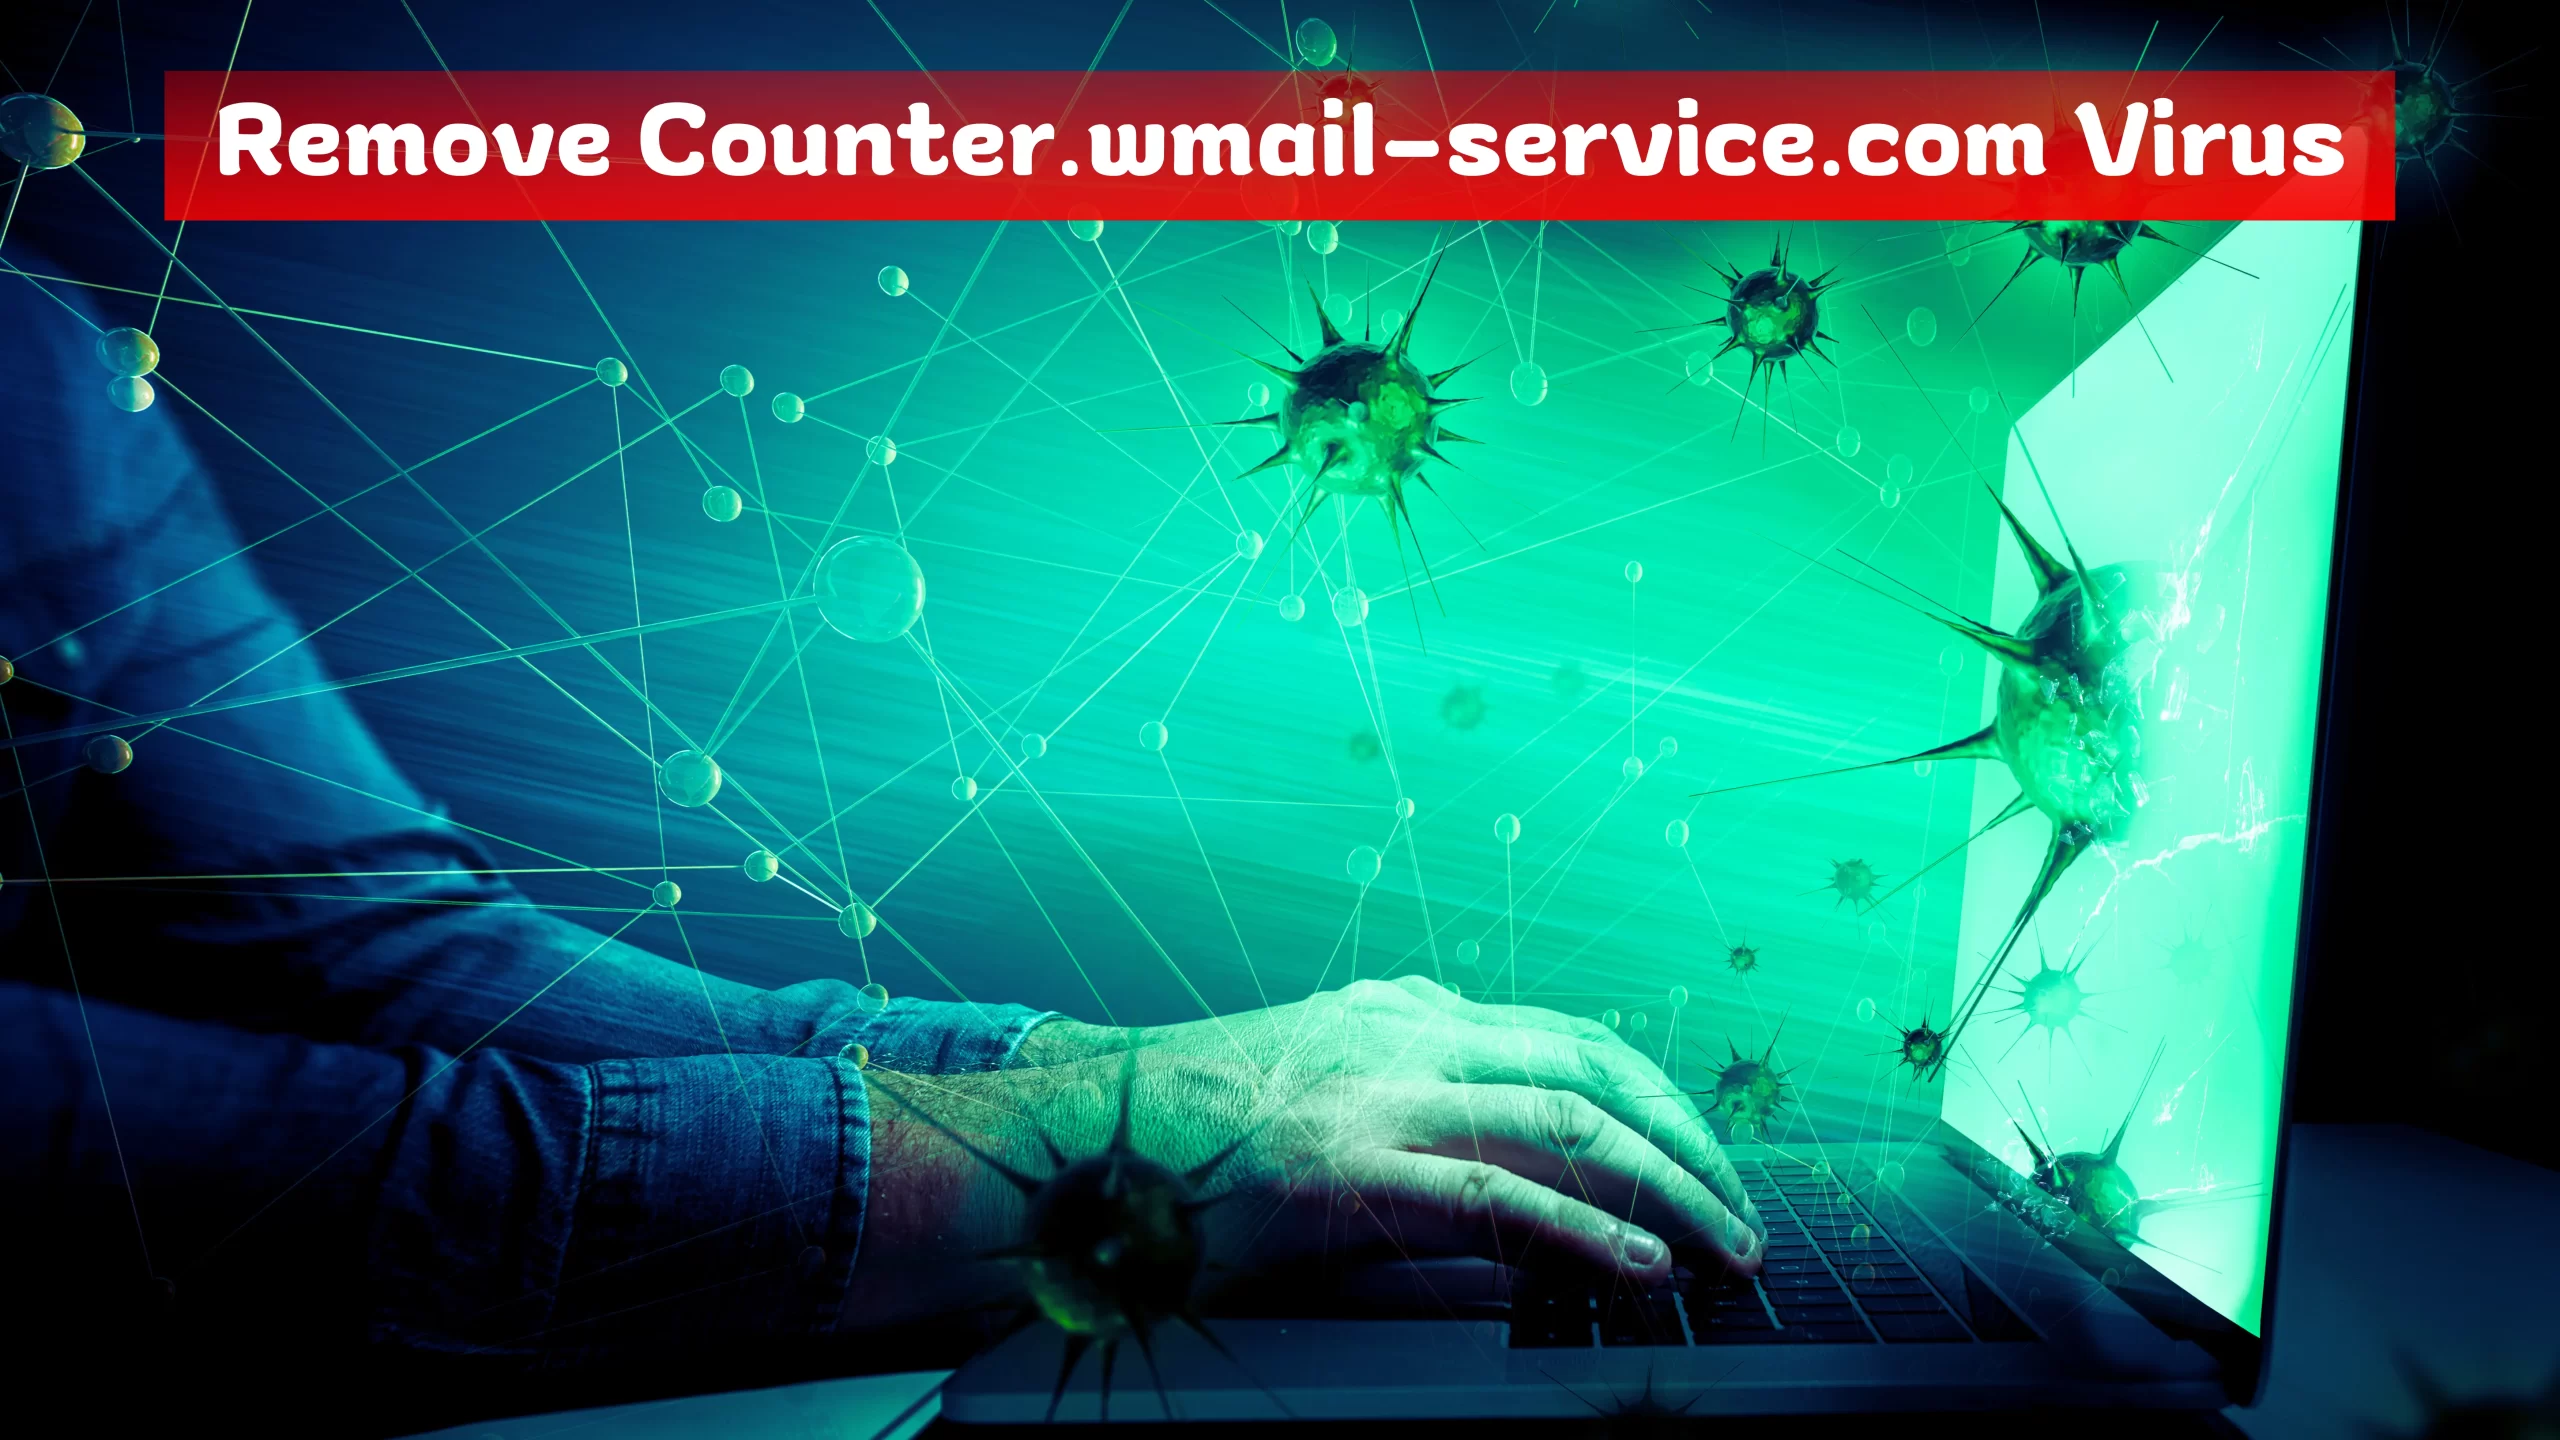 Counter.wmail-service.com 